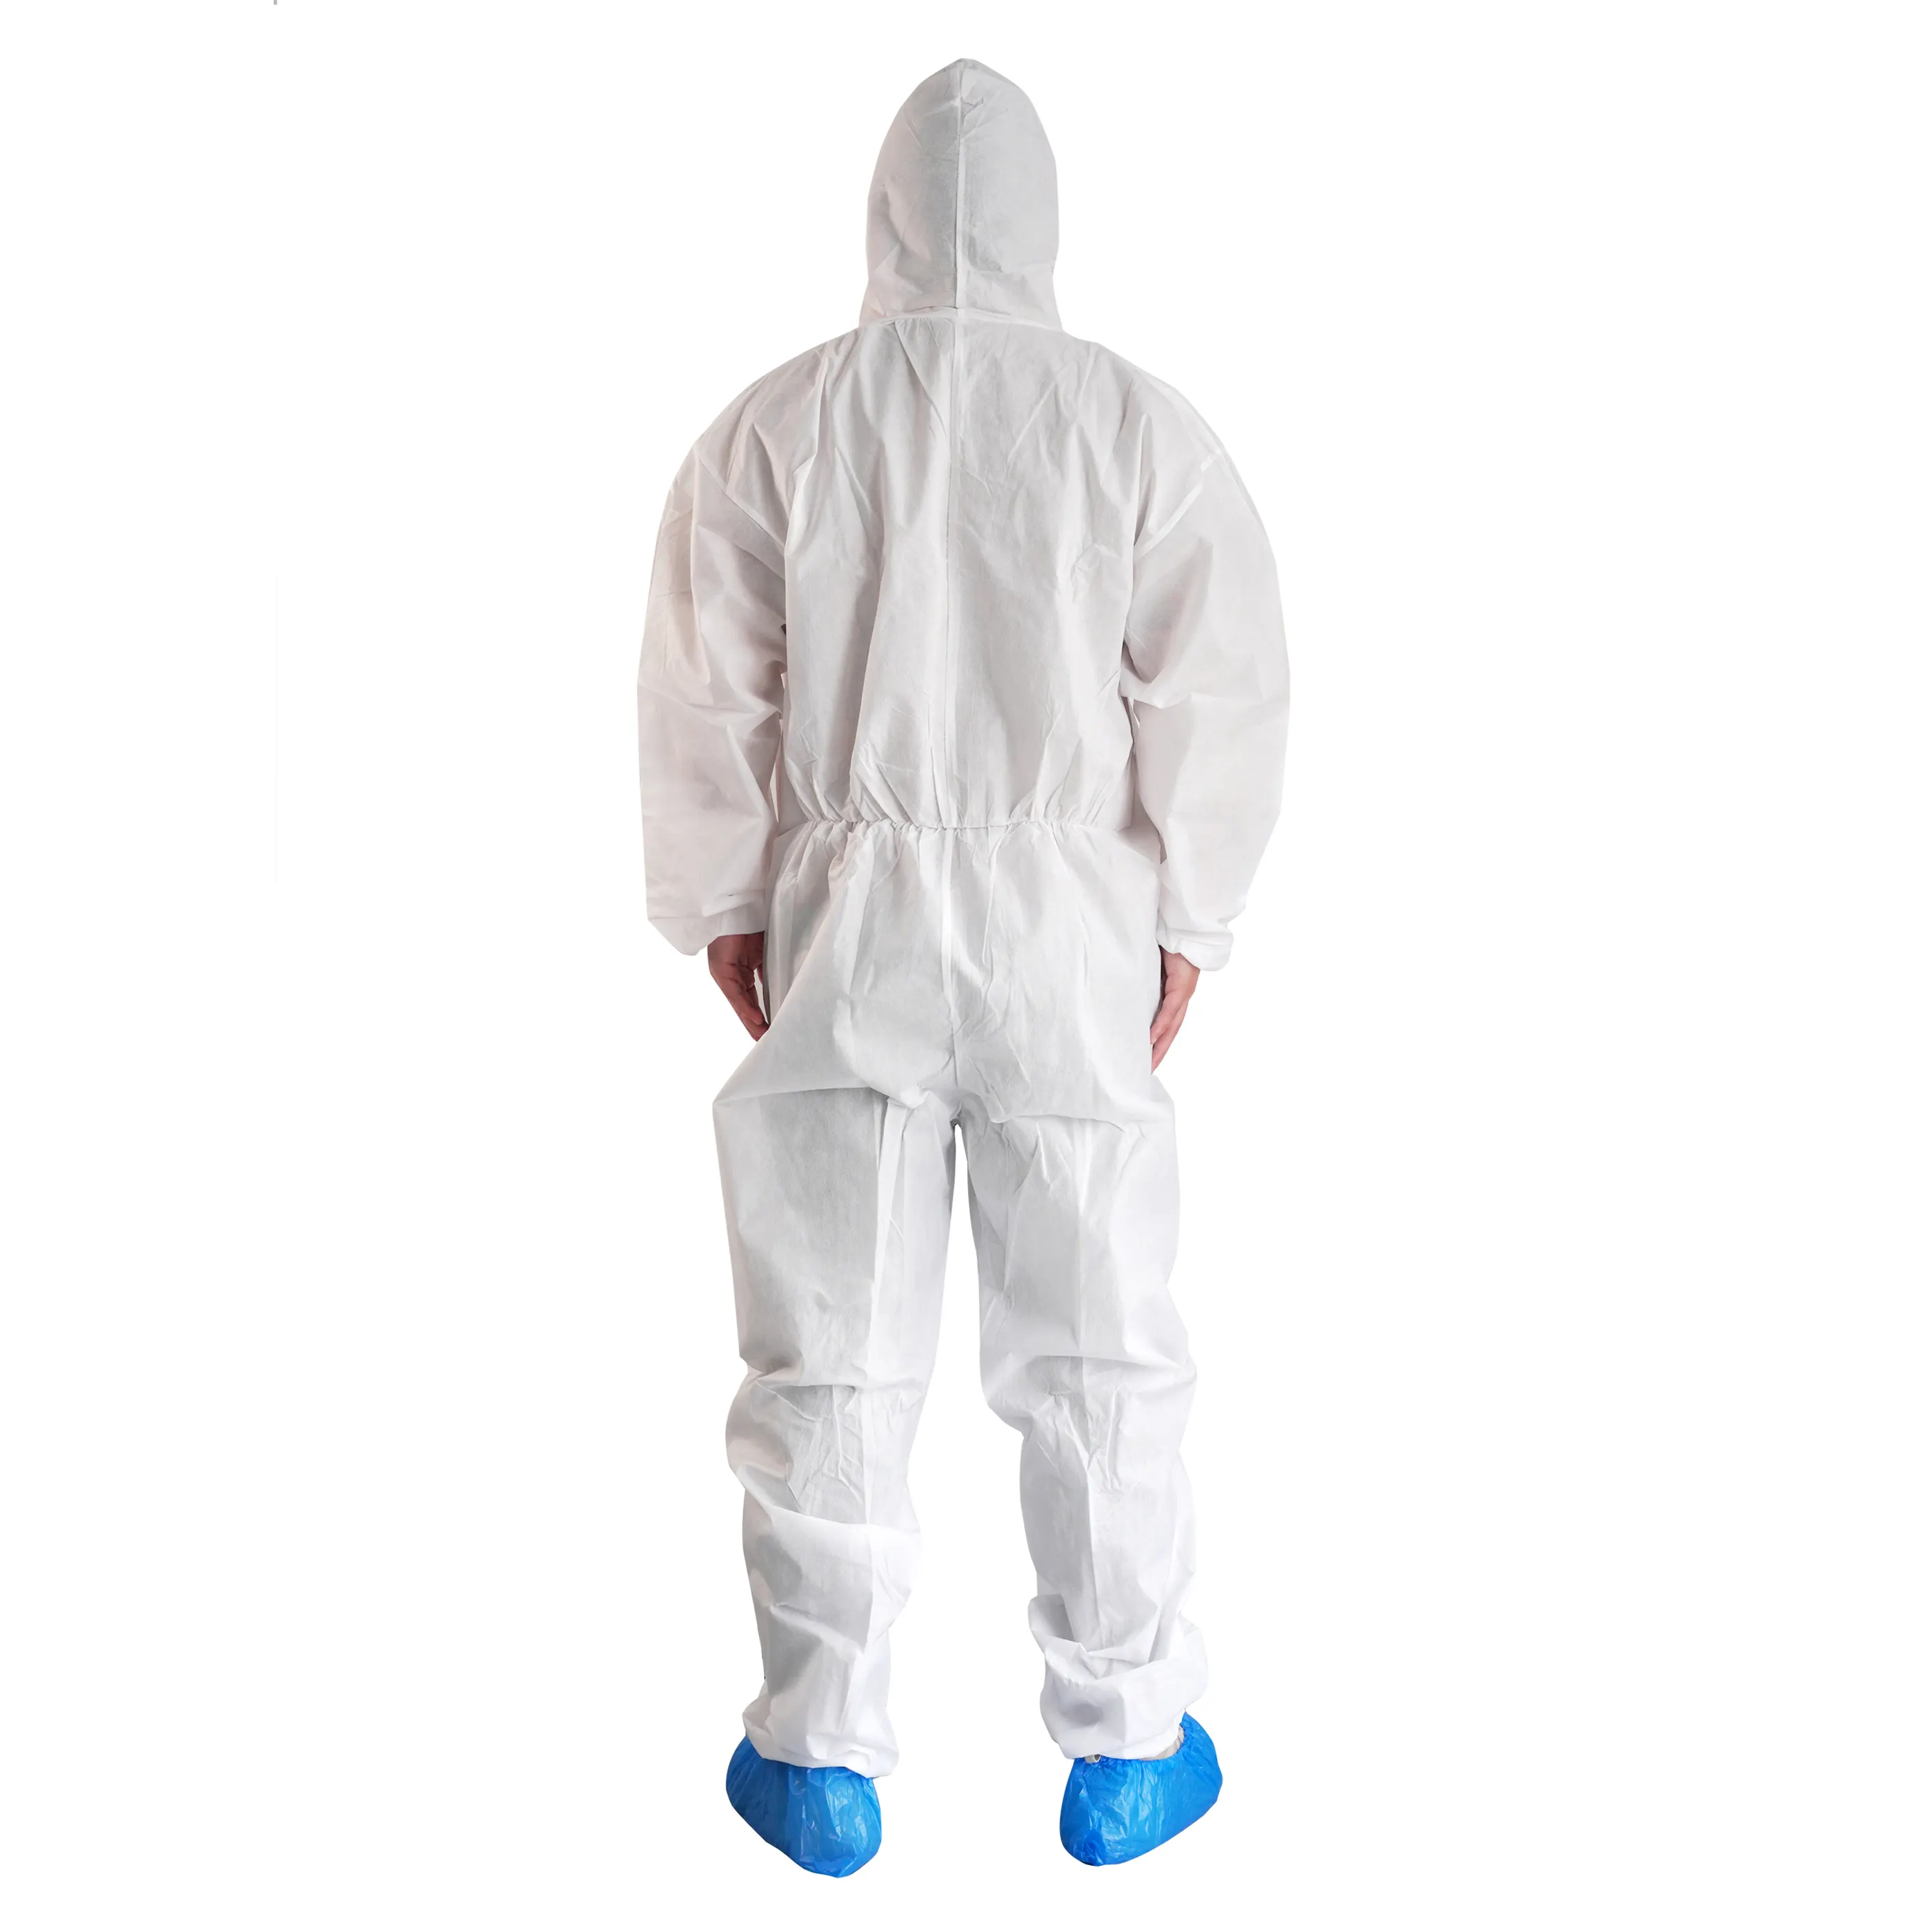 उच्च गुणवत्ता के साथ थोक thickened जीवाणुरोधी कपड़े सफेद workwear निविड़ अंधकार coverall फैक्टरी बेस्टसेलर